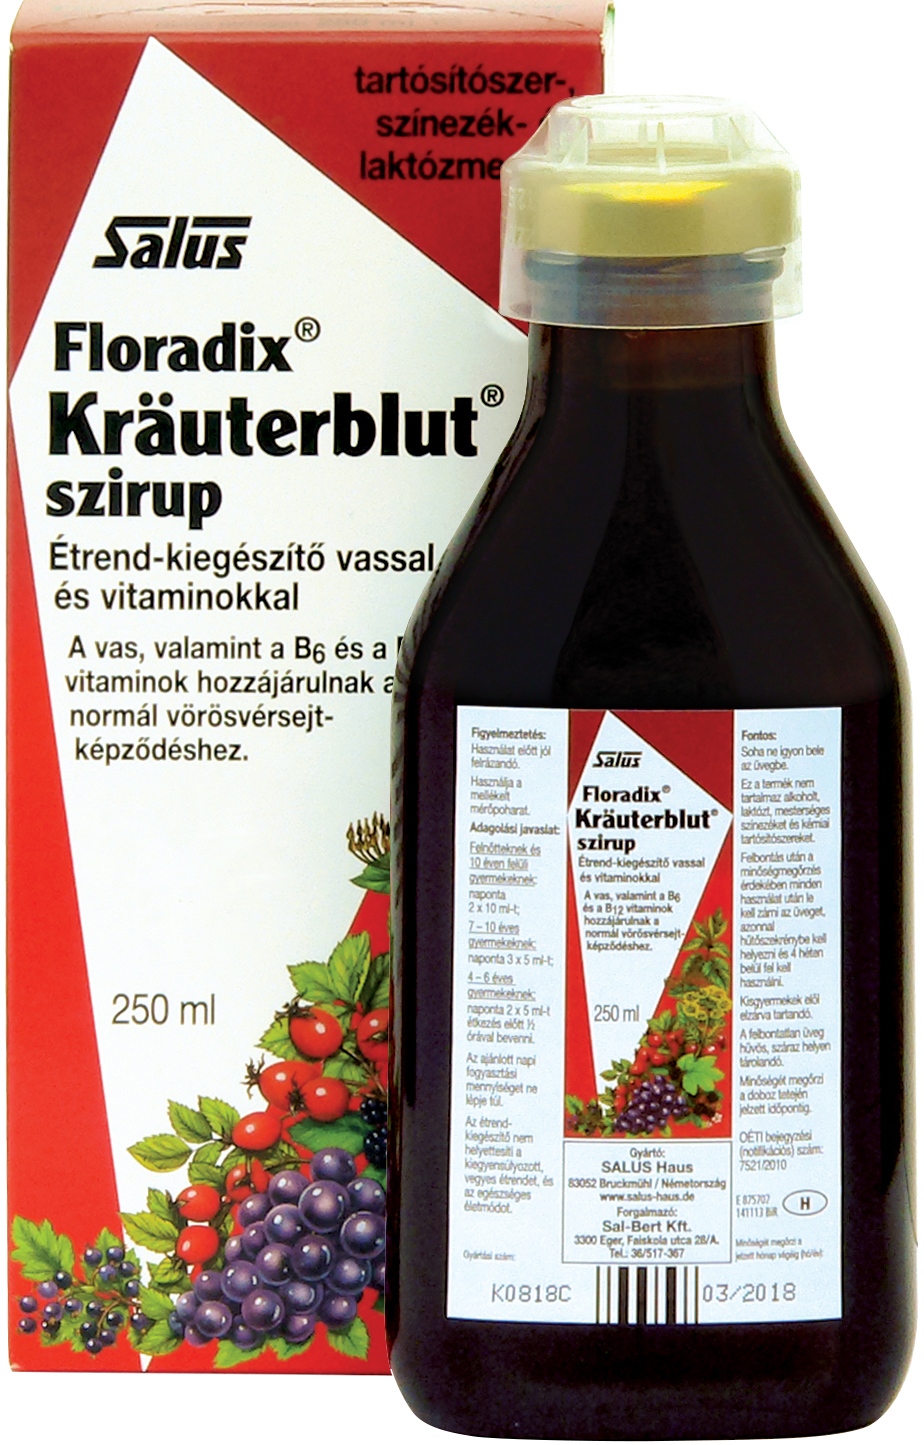 Salus Floradix Krauterblut szirup 250 ml